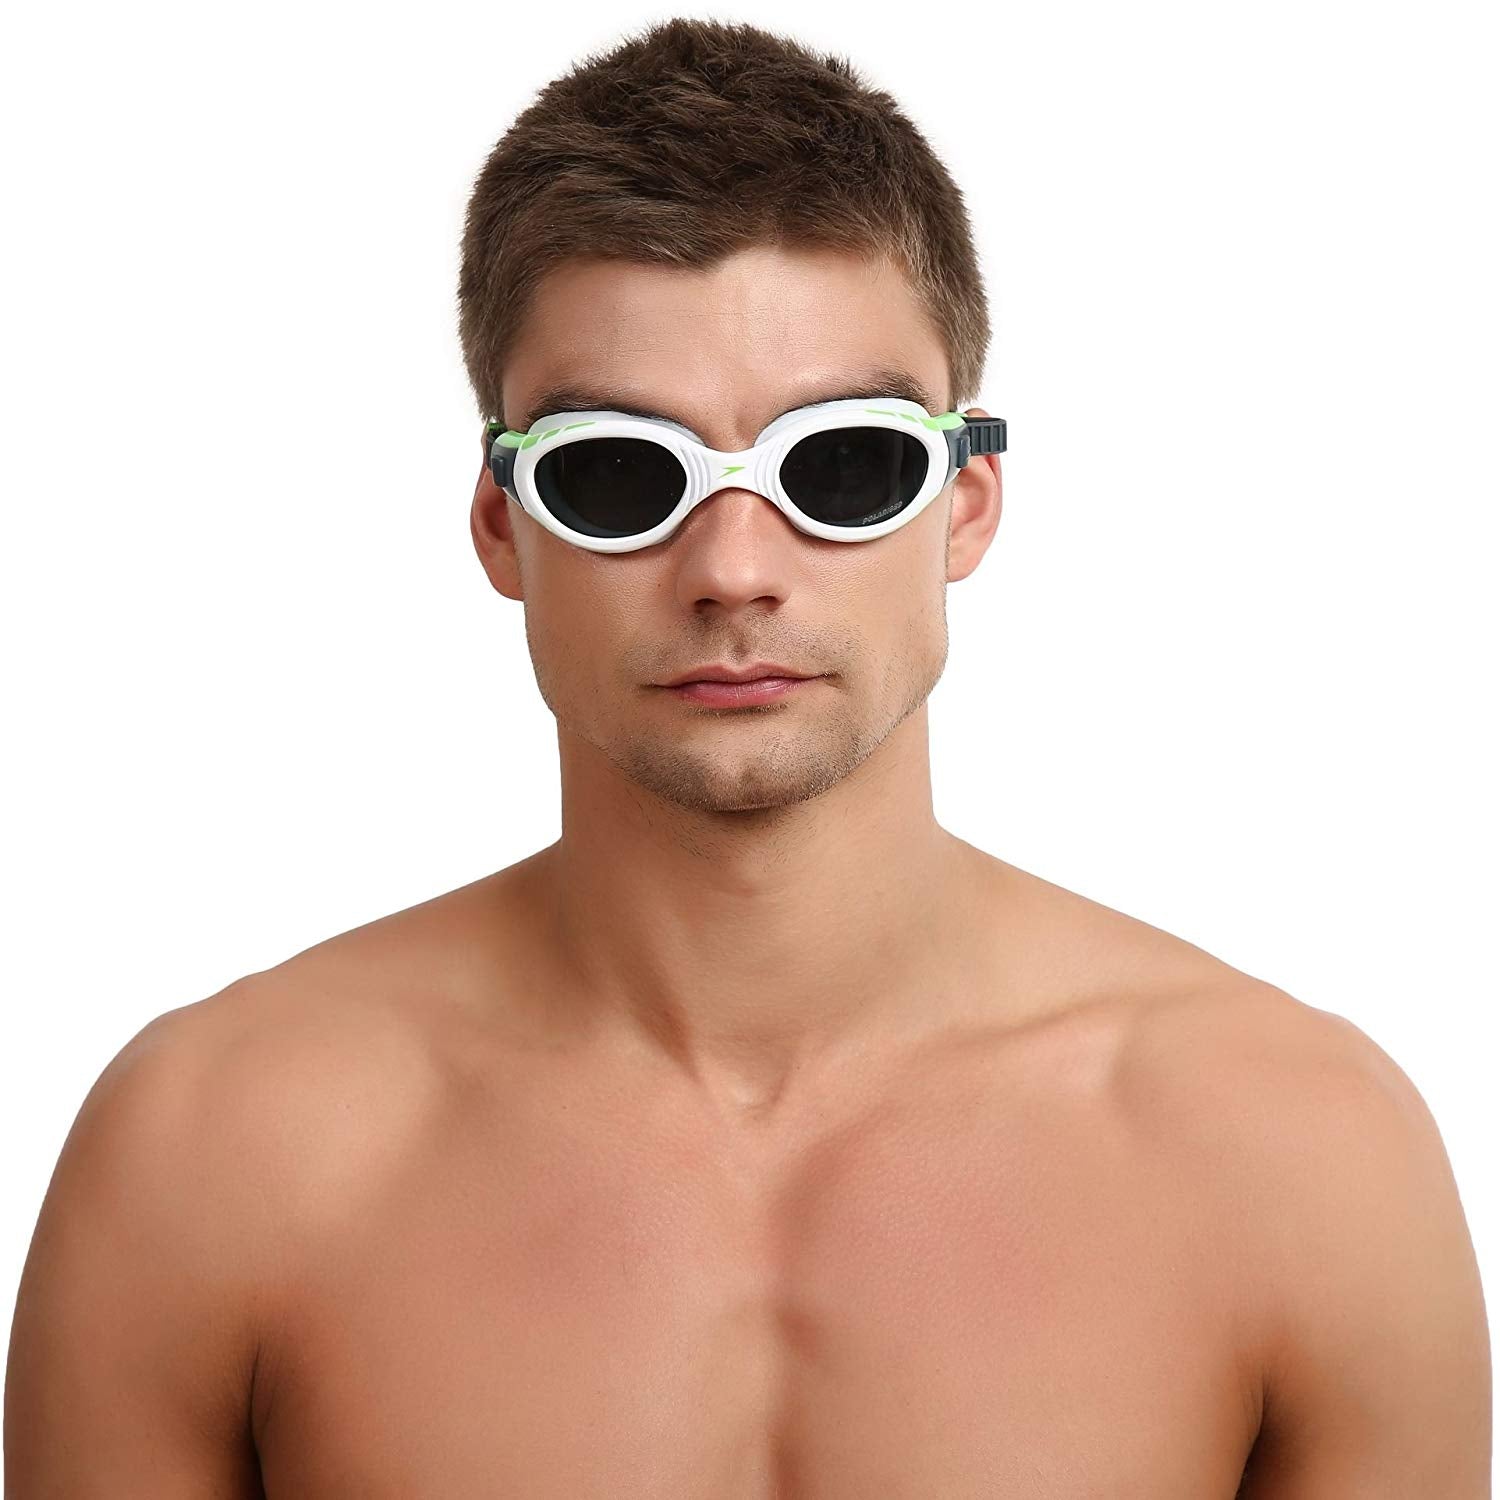 Speedo Unisex-Adult Futura Biofuse Polarised Goggles (White/Green) - Best Price online Prokicksports.com